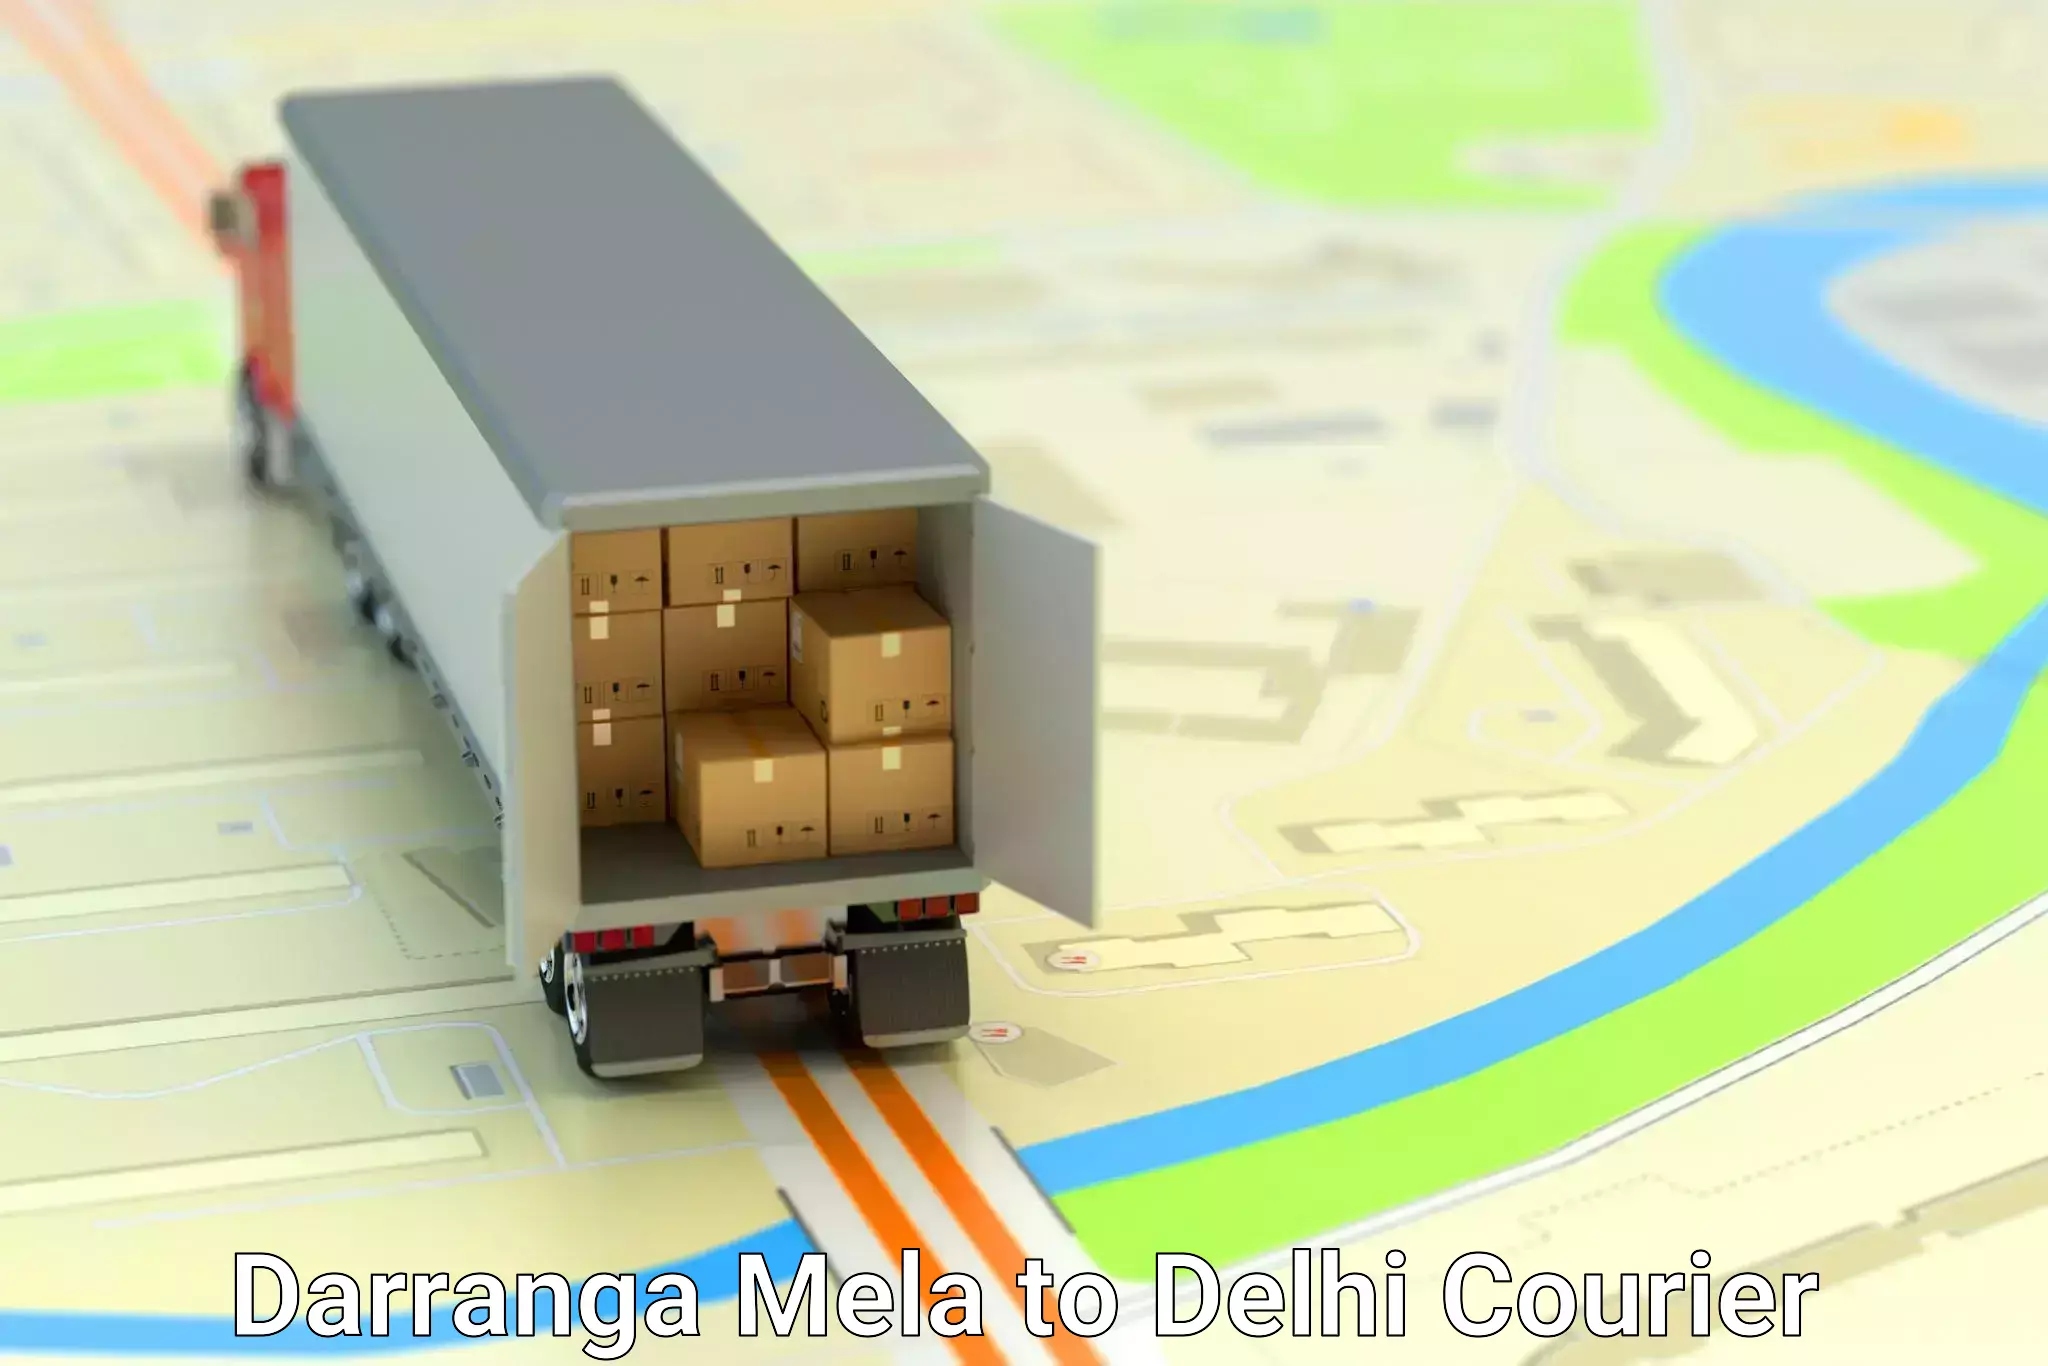 Express mail solutions Darranga Mela to East Delhi